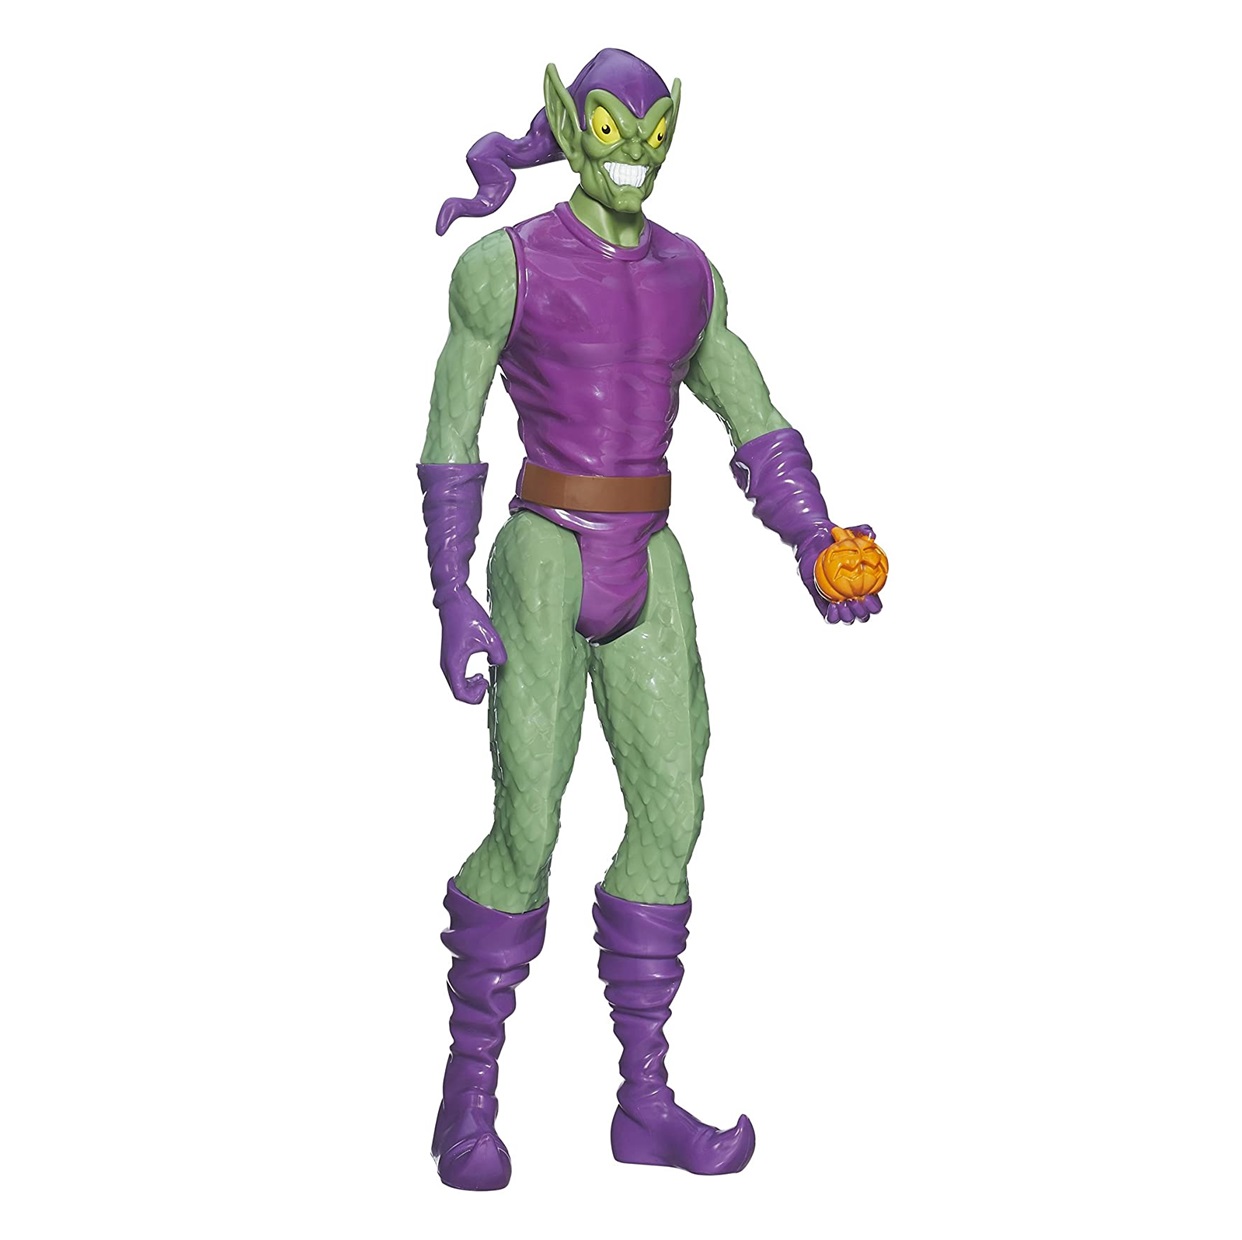 Green Goblin Figura Marvel Ultimate Spider Man Web Warriors 